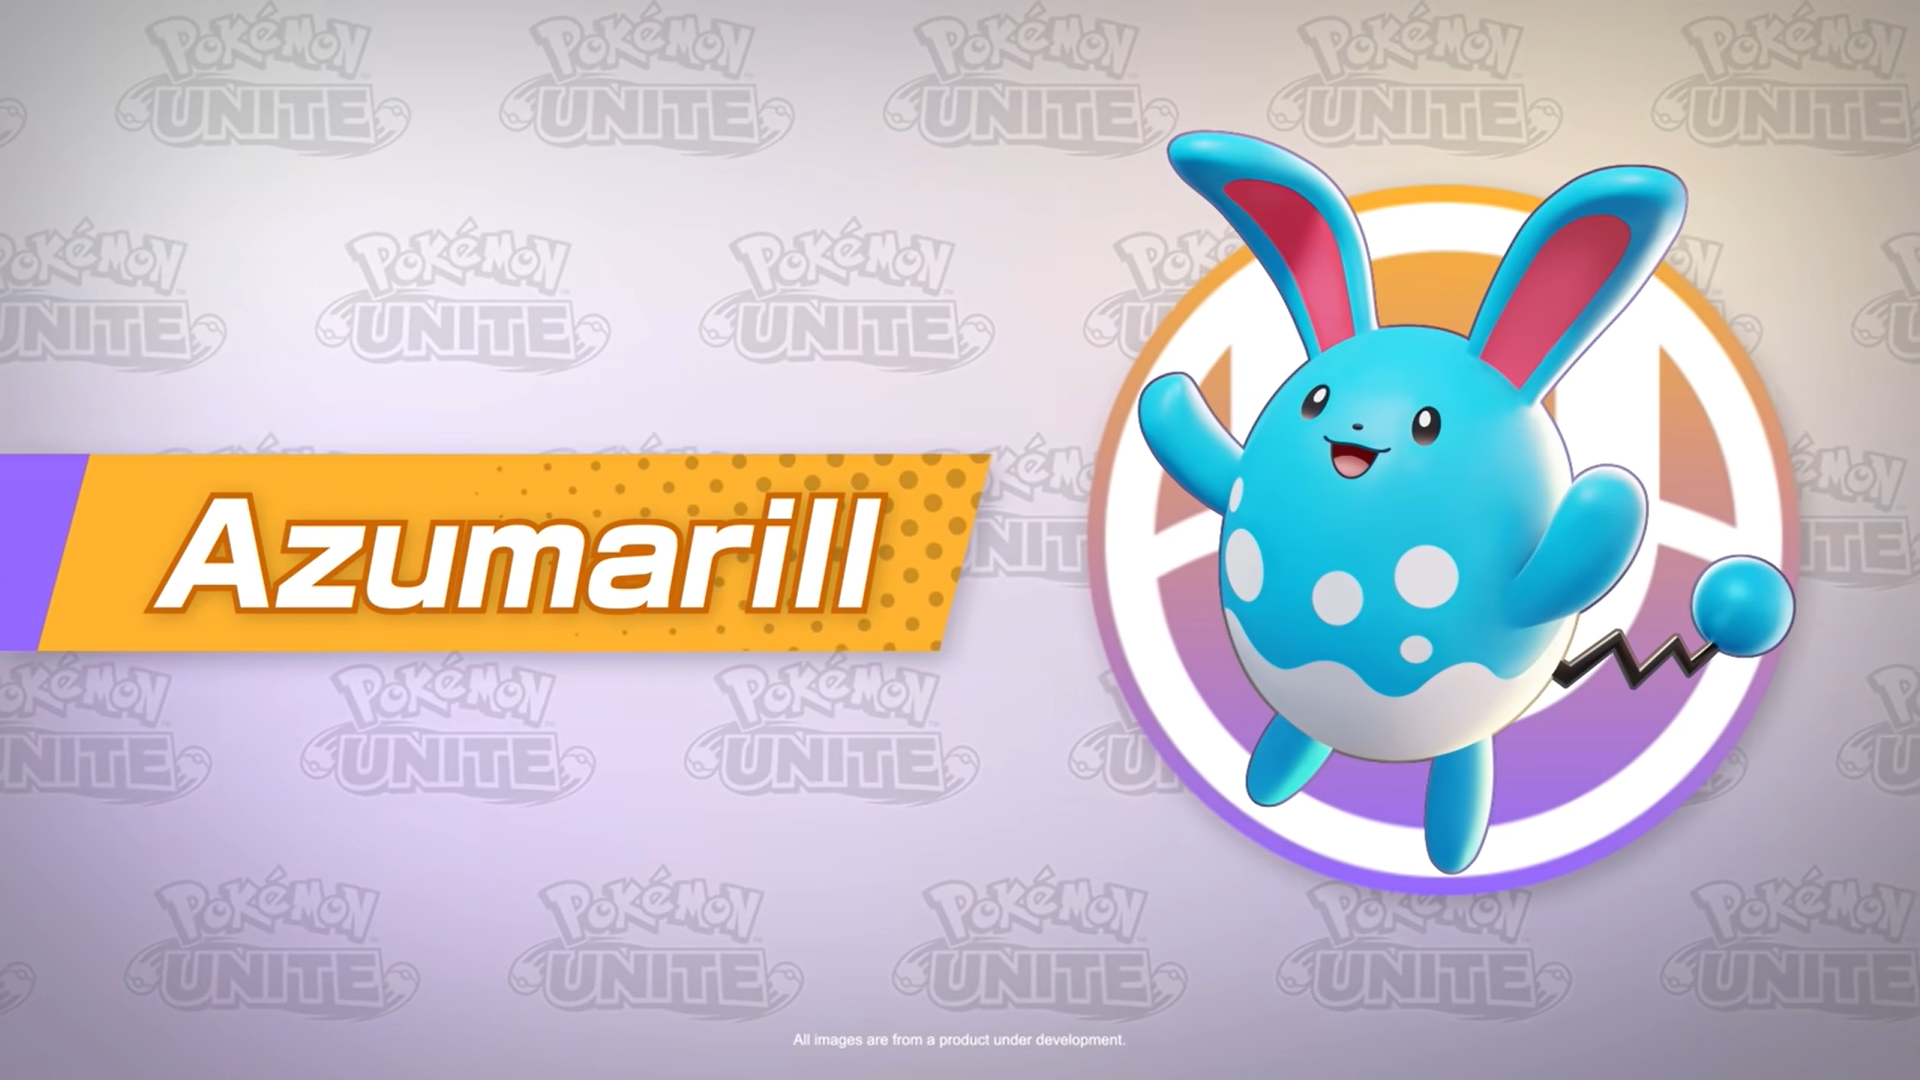 Pokémon Unite Azumarill